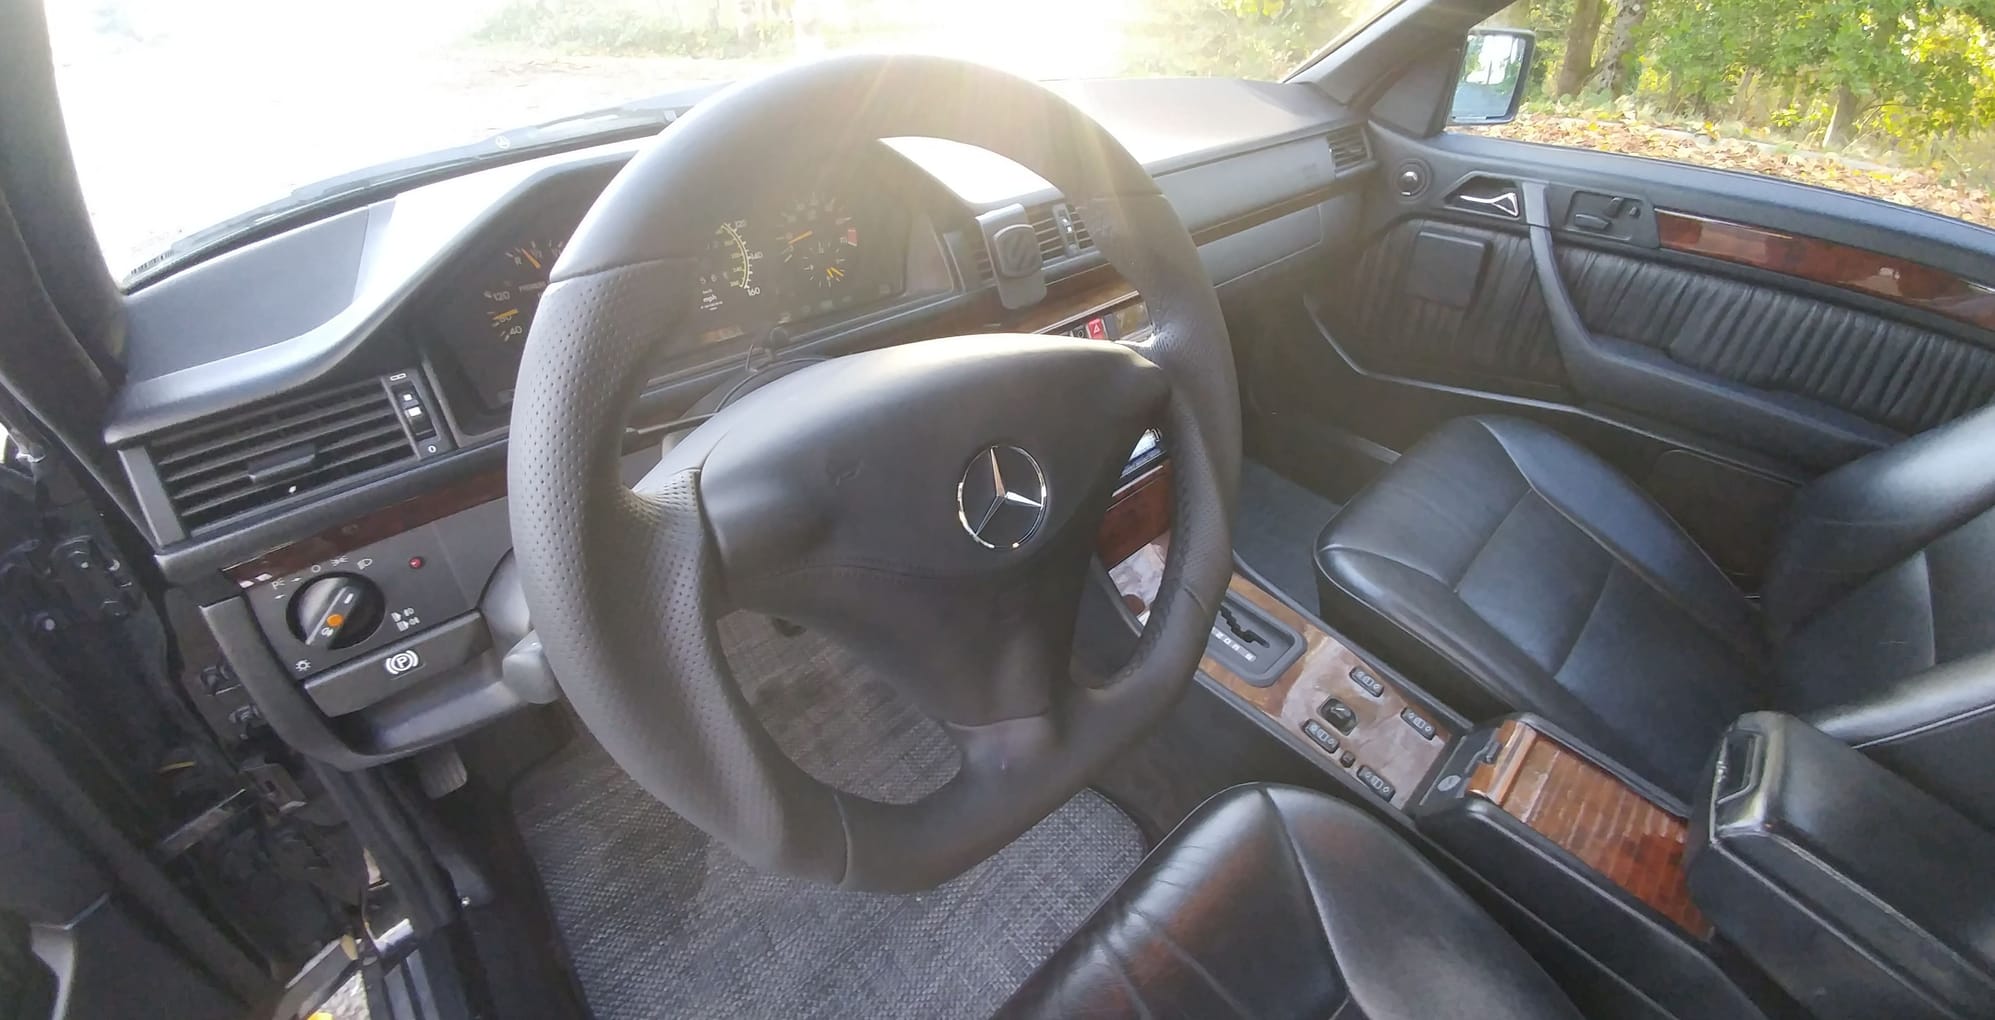 1994 Mercedes-Benz E320 - Beautiful 1994 E320 W124 Coupe - Used - VIN WDBEA52E6RC092637 - 137,302 Miles - 6 cyl - 2WD - Automatic - Coupe - Black - Seattle, WA 98198, United States